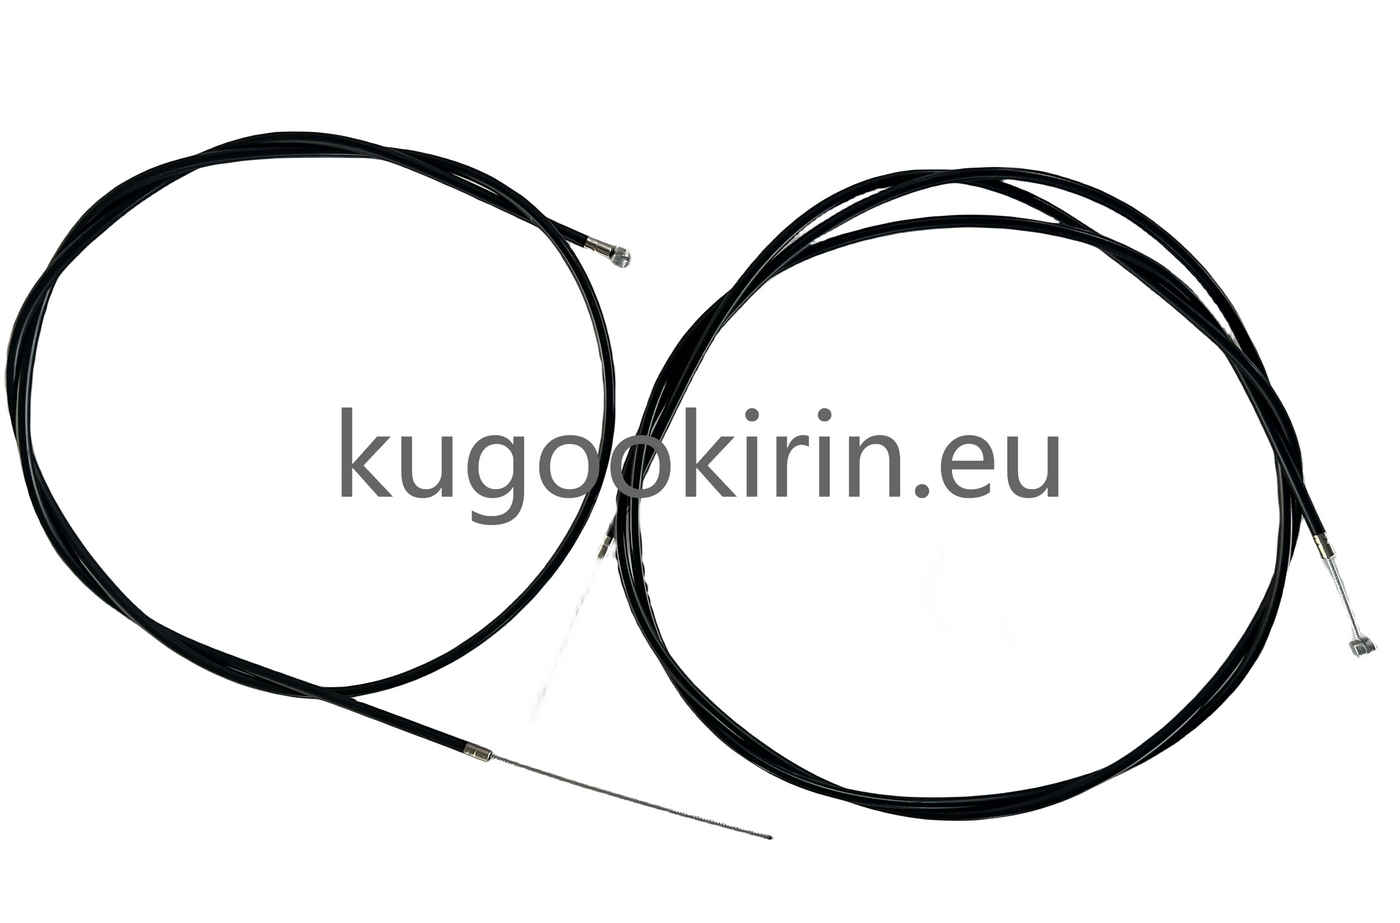 Linea del freno per Kugoo Kirin (KuKirin) G2 Max